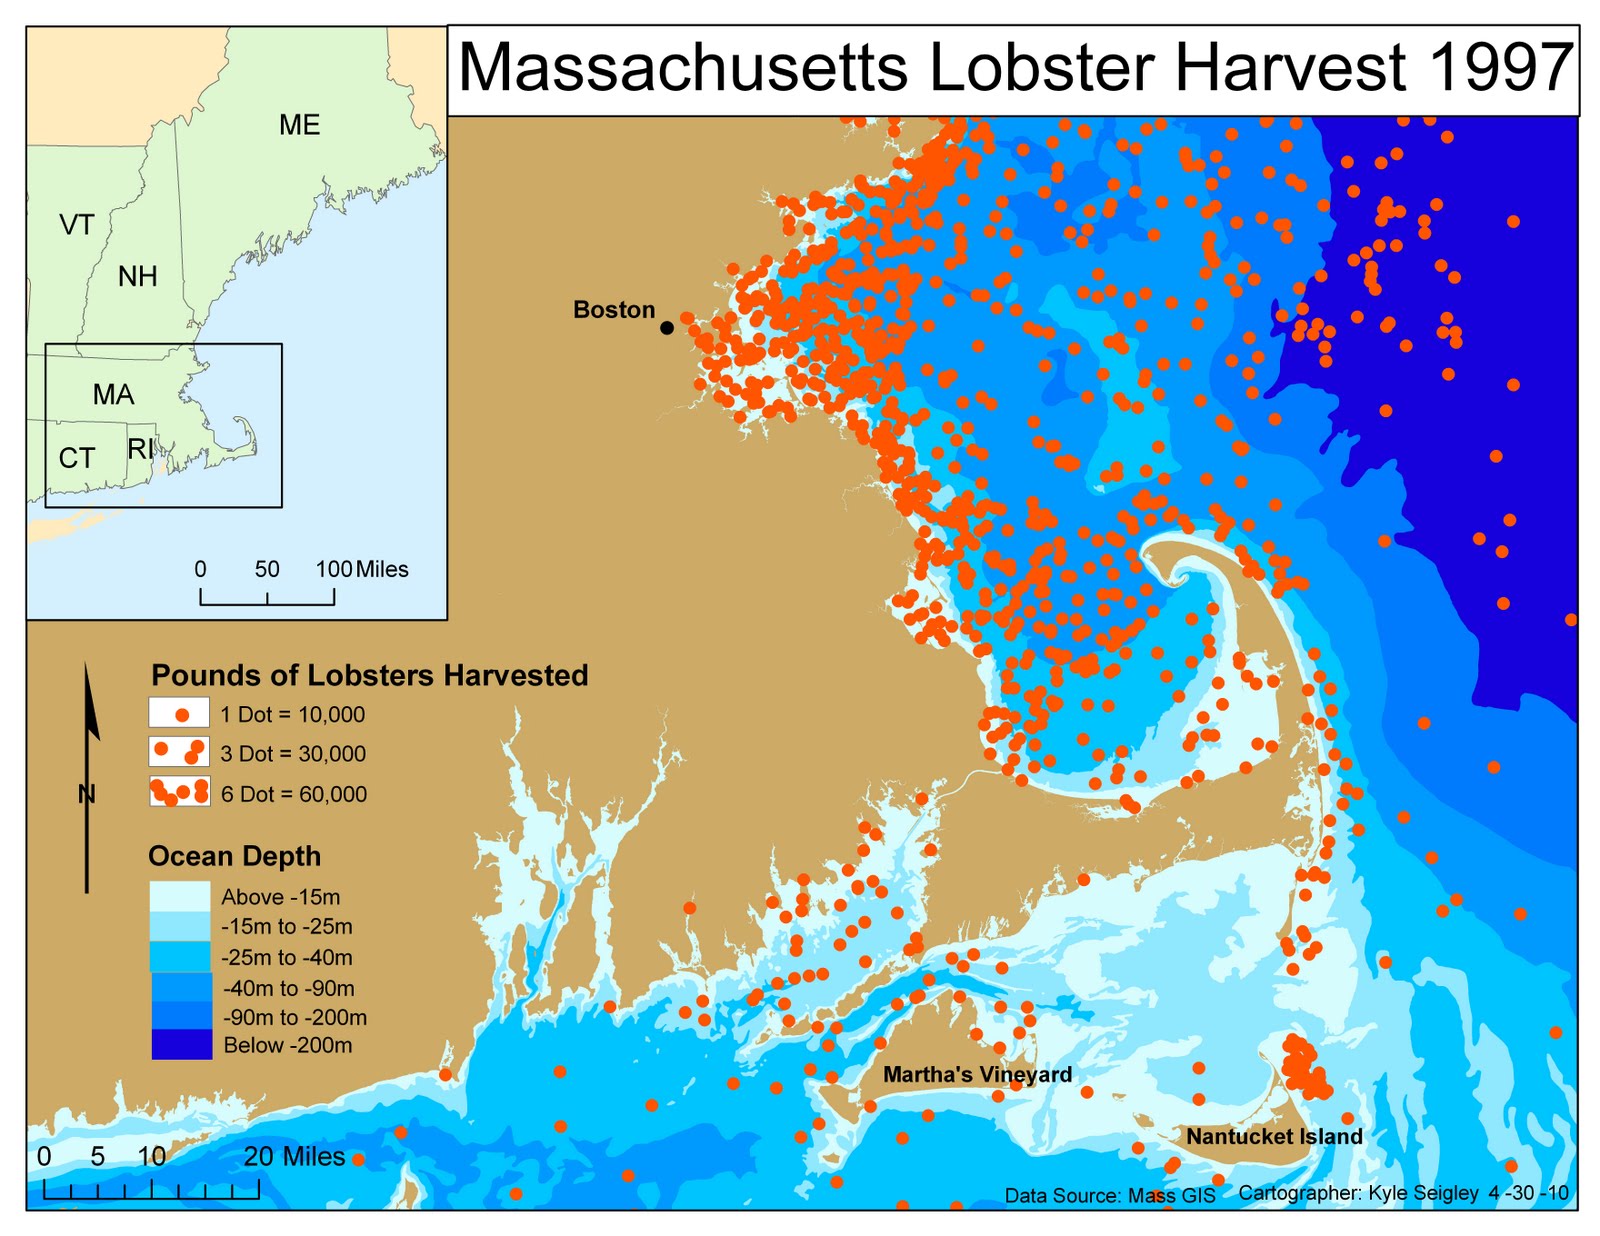 Seigley Blog: Map #2 (Massachusetts Lobster Harvest 1997) final project